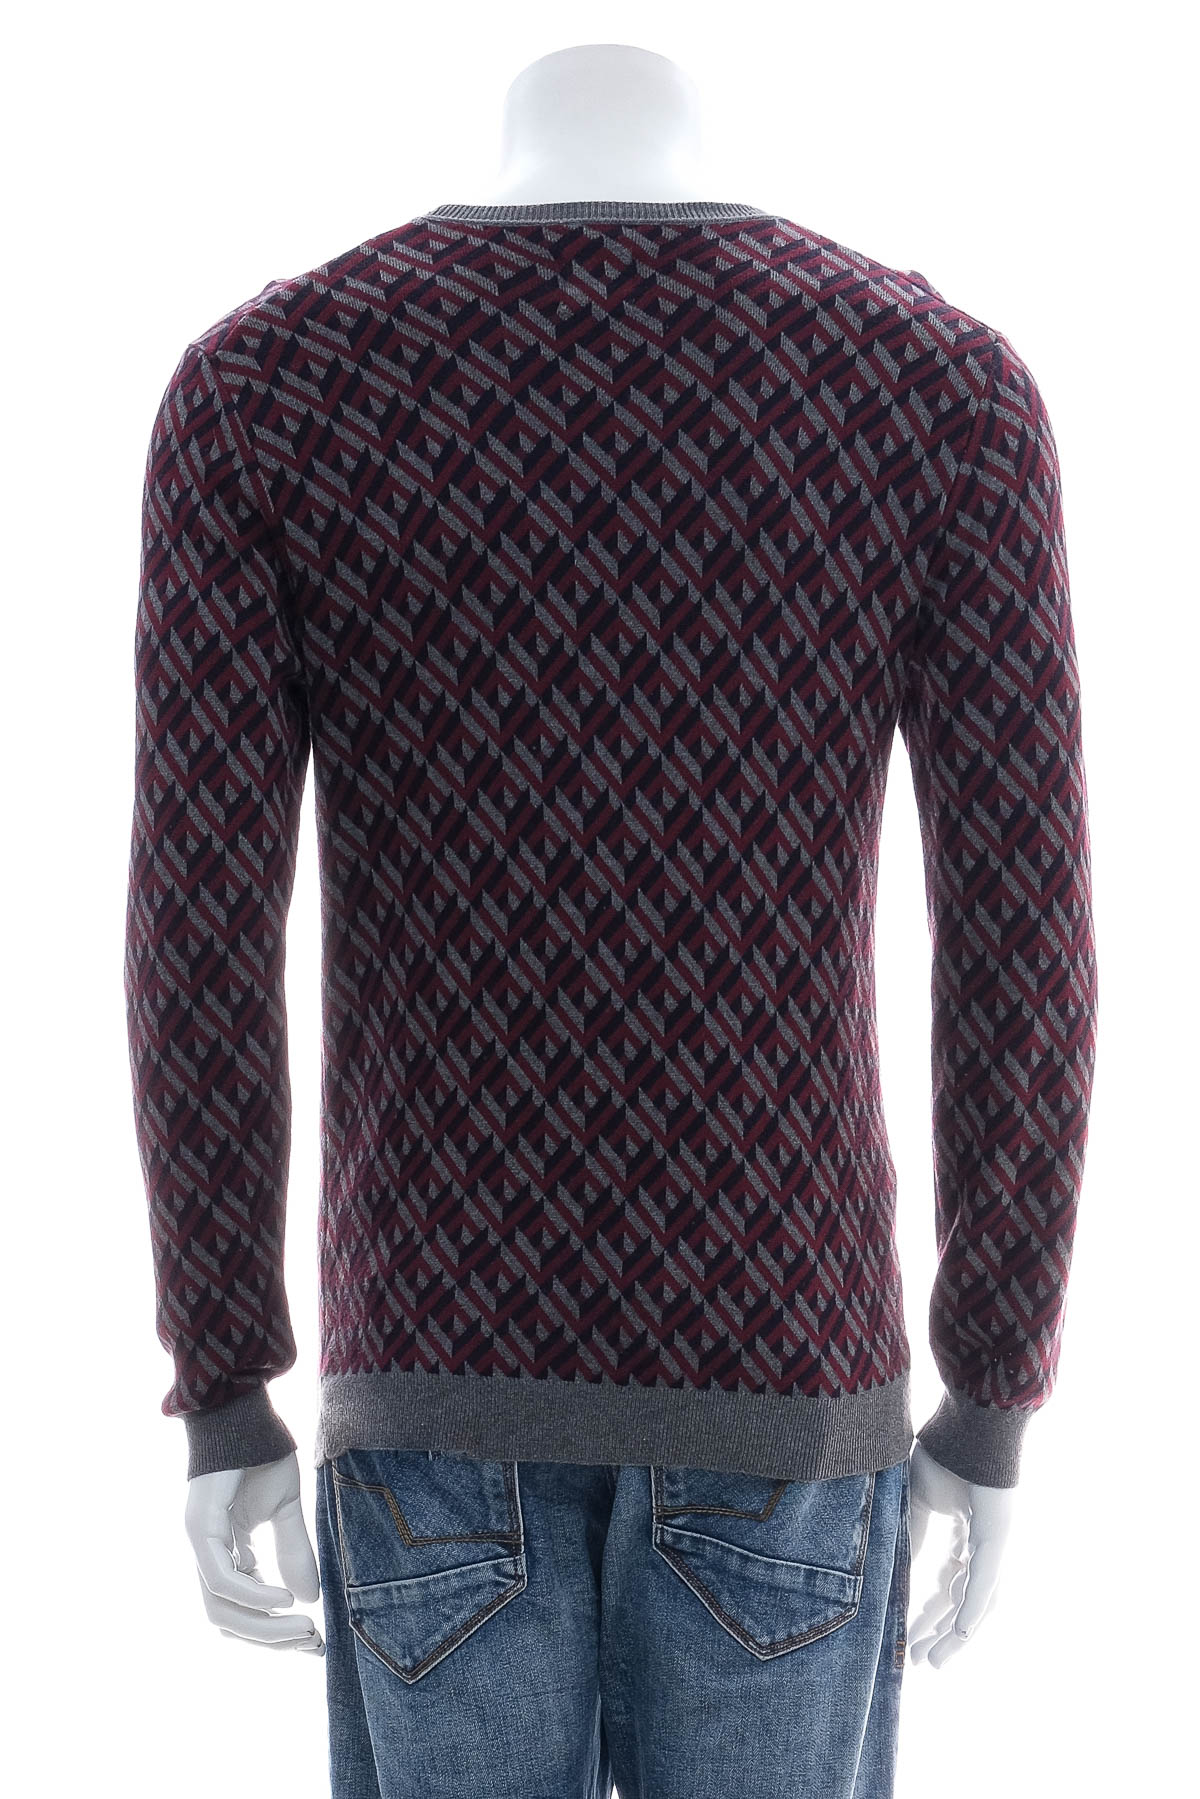 Men's sweater - Olymp - 1